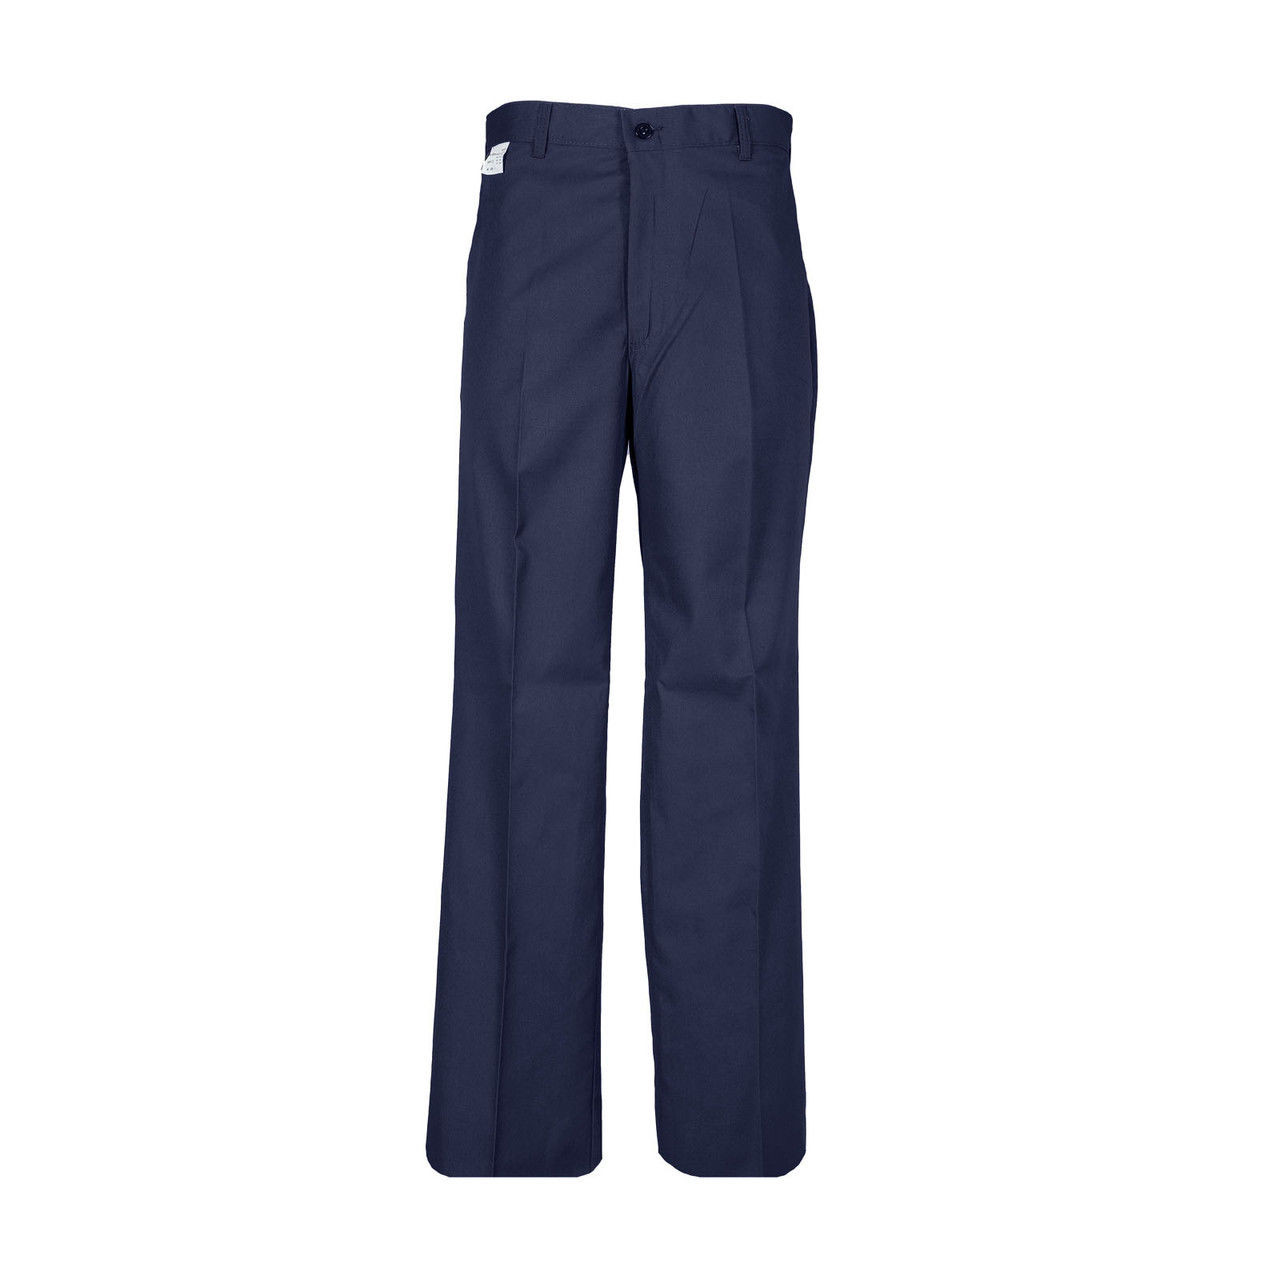 P20BL Men's Industrial Work Pant, Navy Blue Industrial Pants